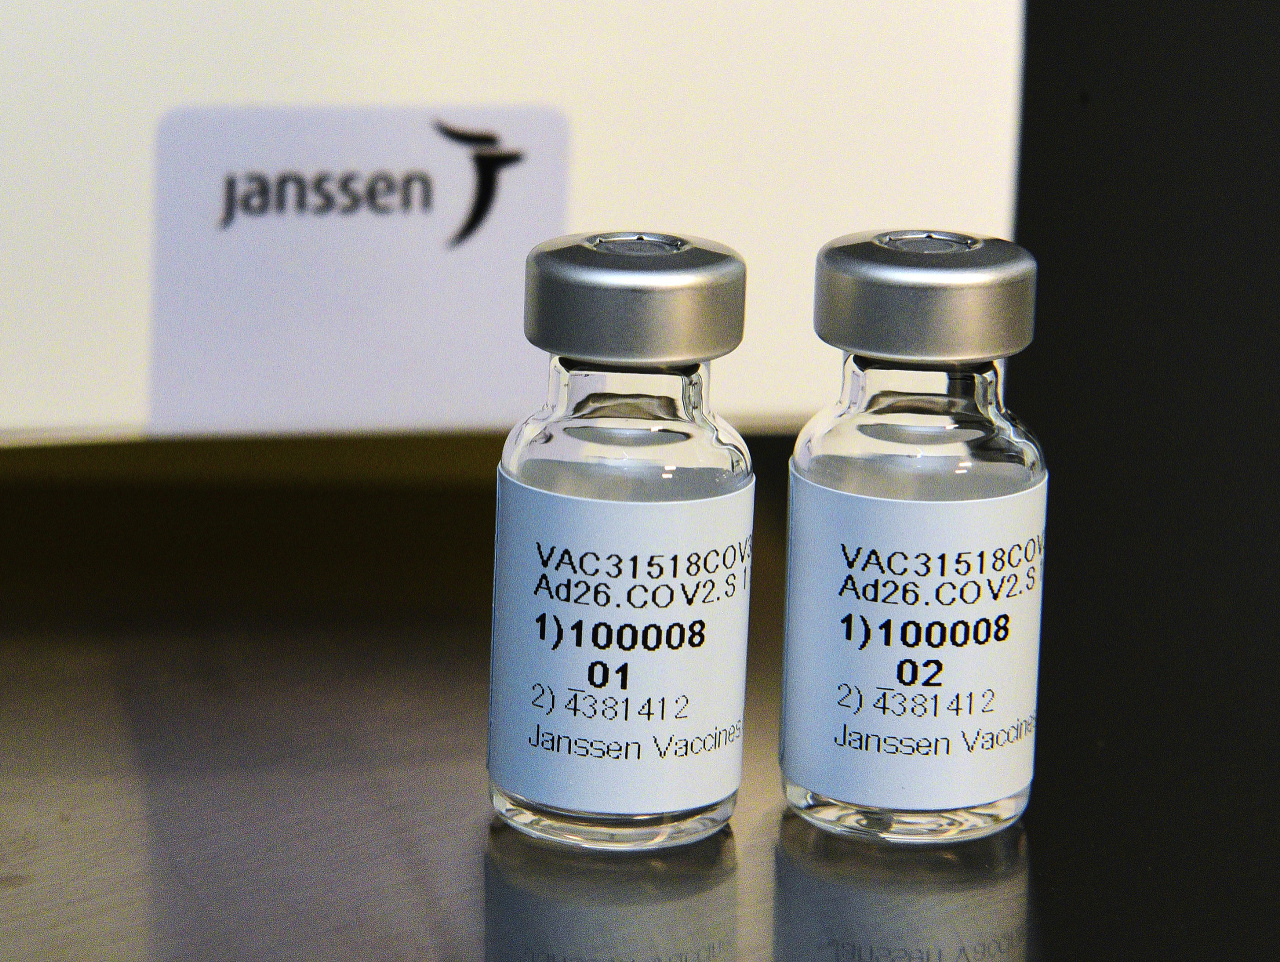 Vakcína od Johnson & Johnson